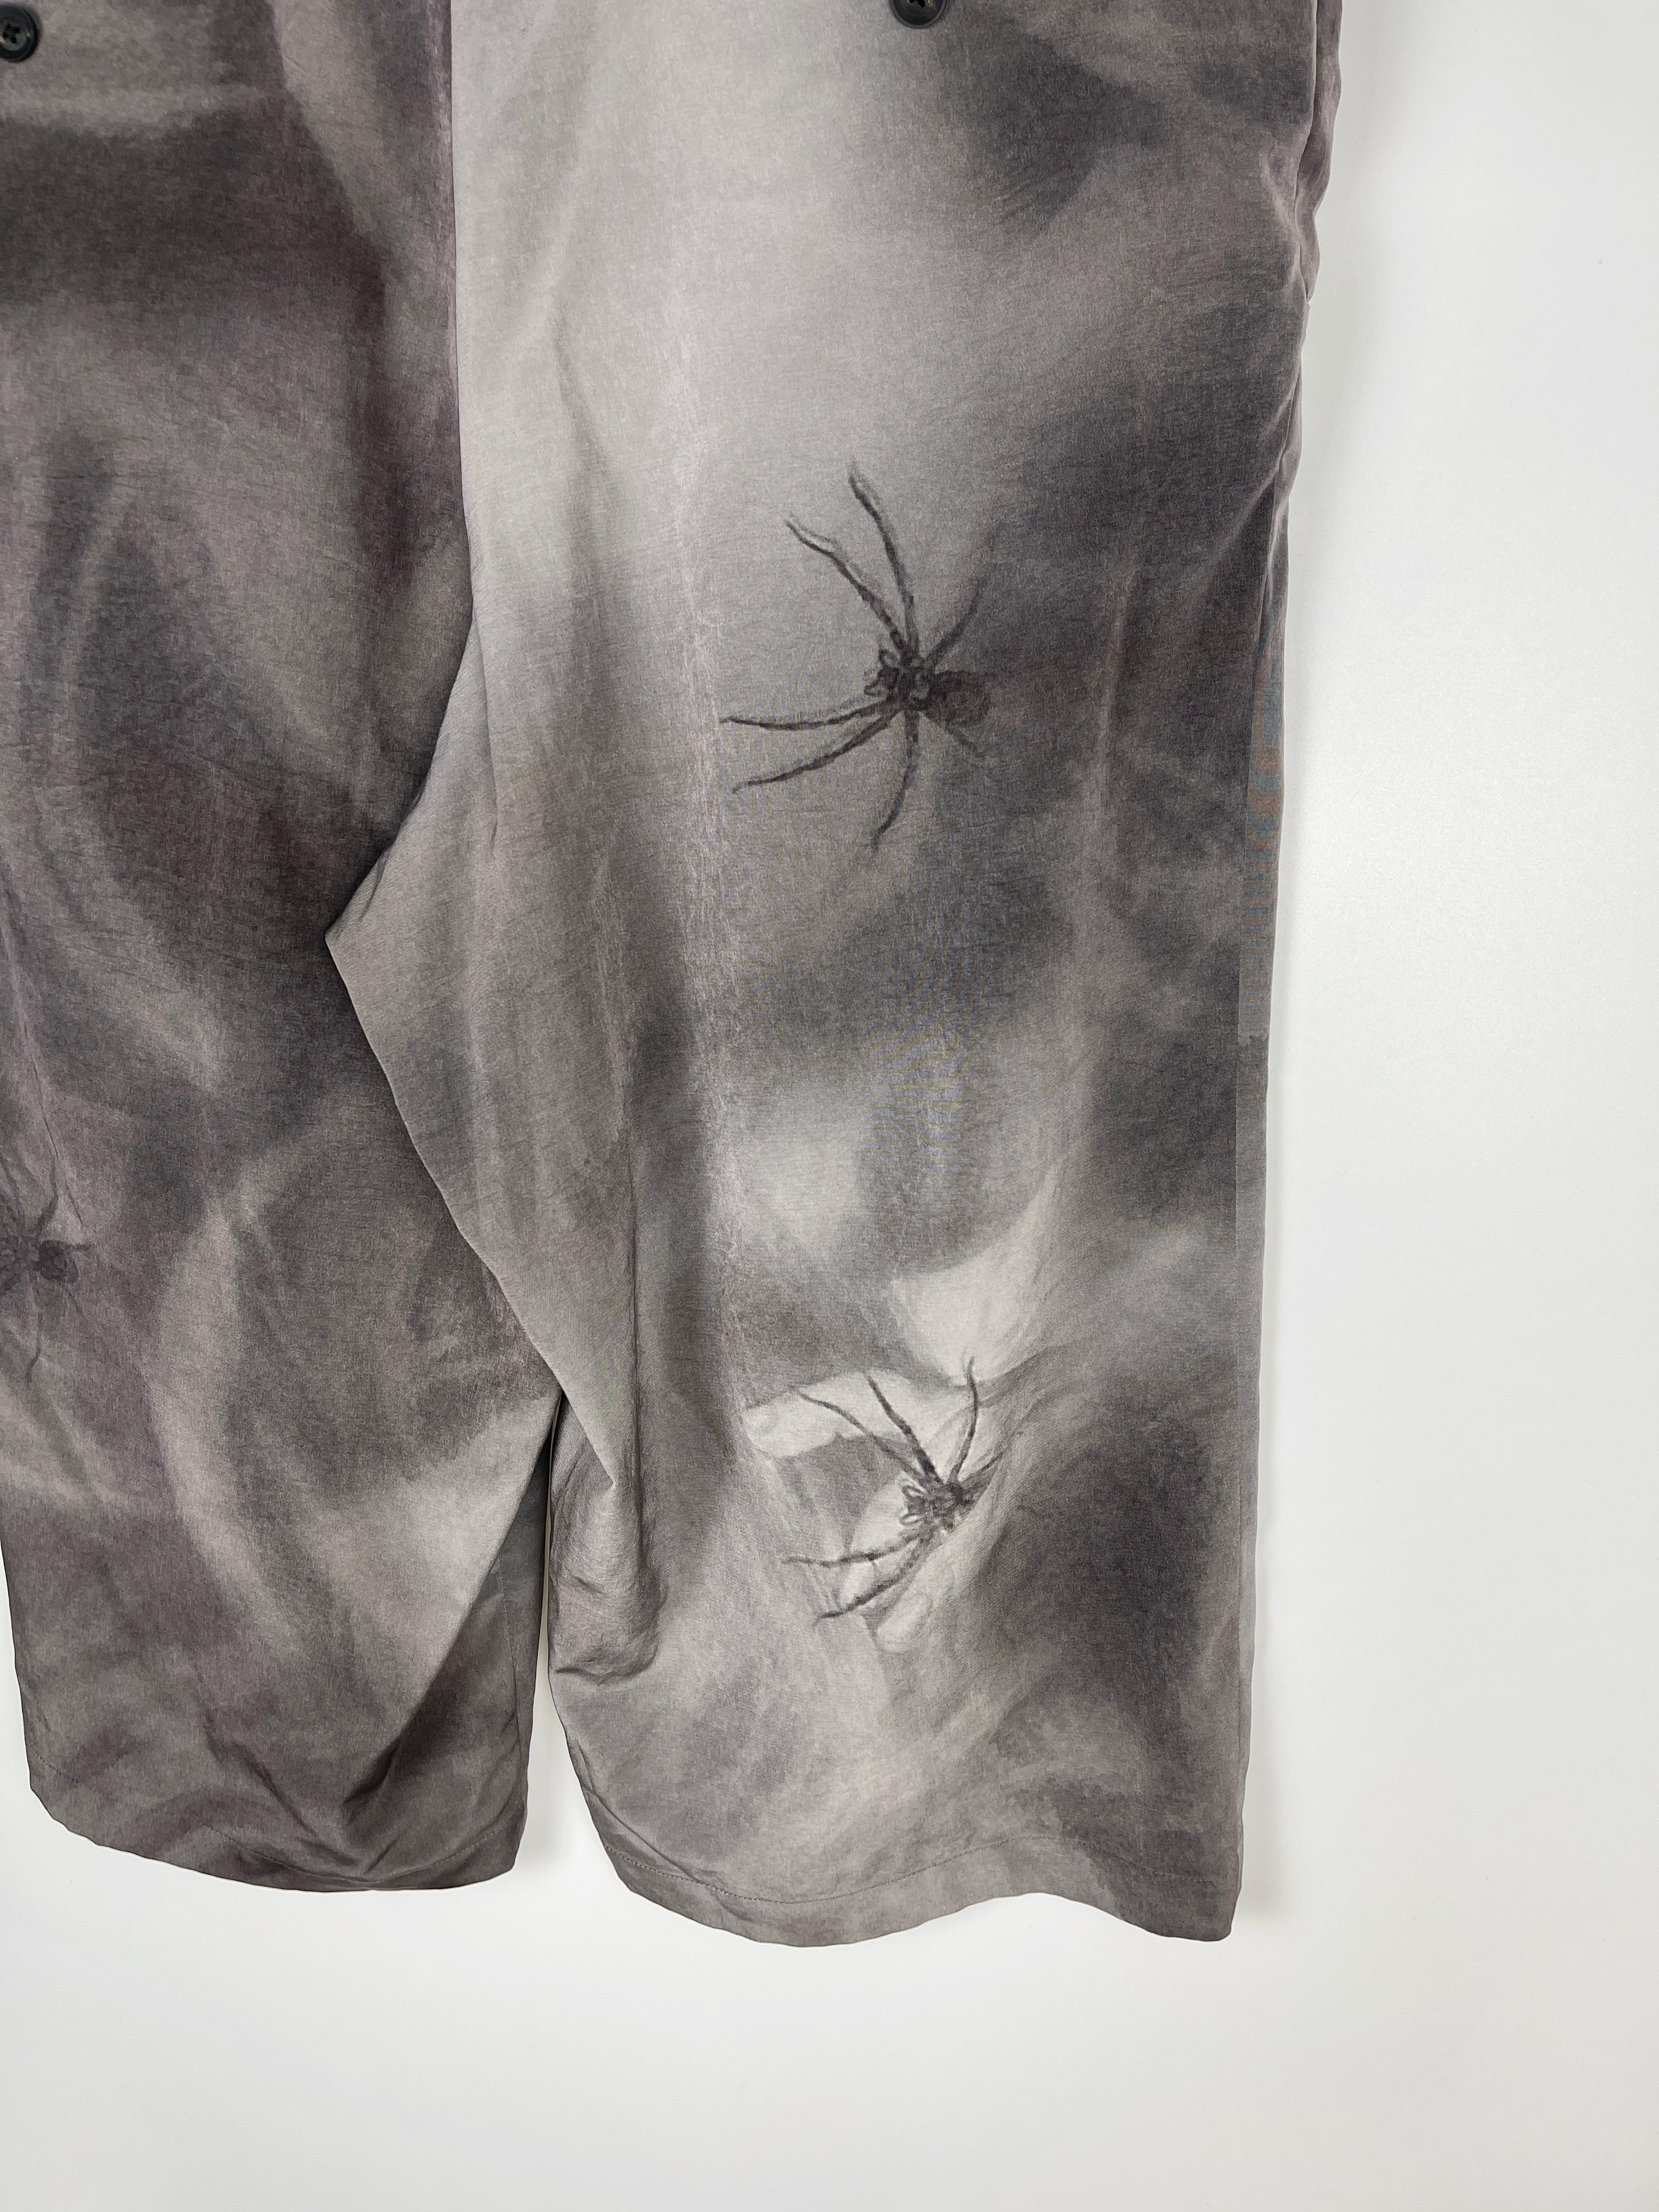 Women's or Men's Yohji Yamamoto Pour Homme S/S20 Suzume Uchida Spider Shorts For Sale